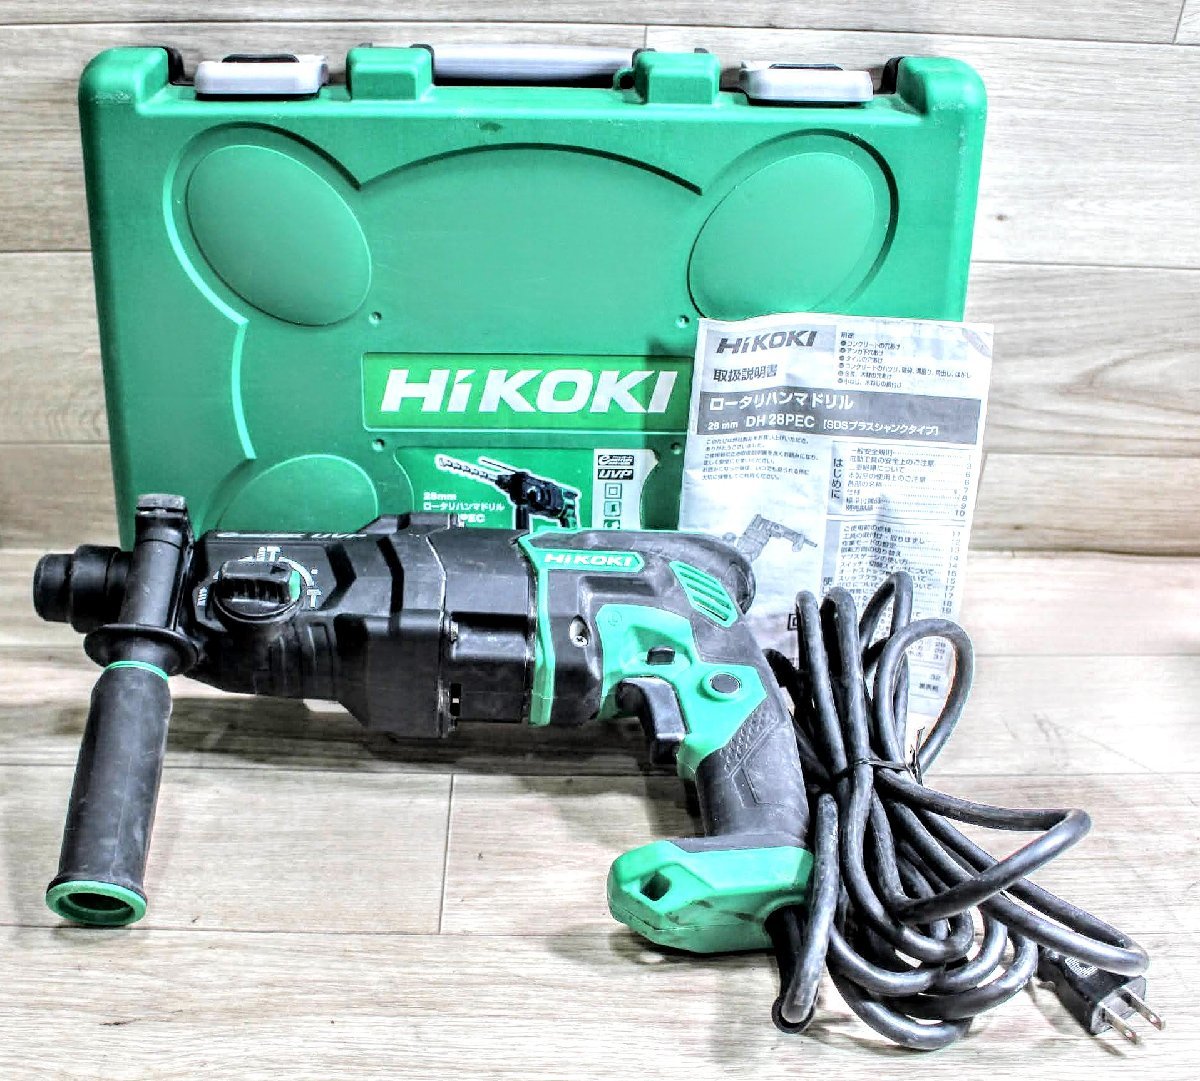 HIKOKI（ハイコーキ）ロータリーハンマドリル ACブラシレスモーター搭載 28mm DH 28PEC 付属品：ケース・説明書 X3SG31  JChere雅虎拍卖代购